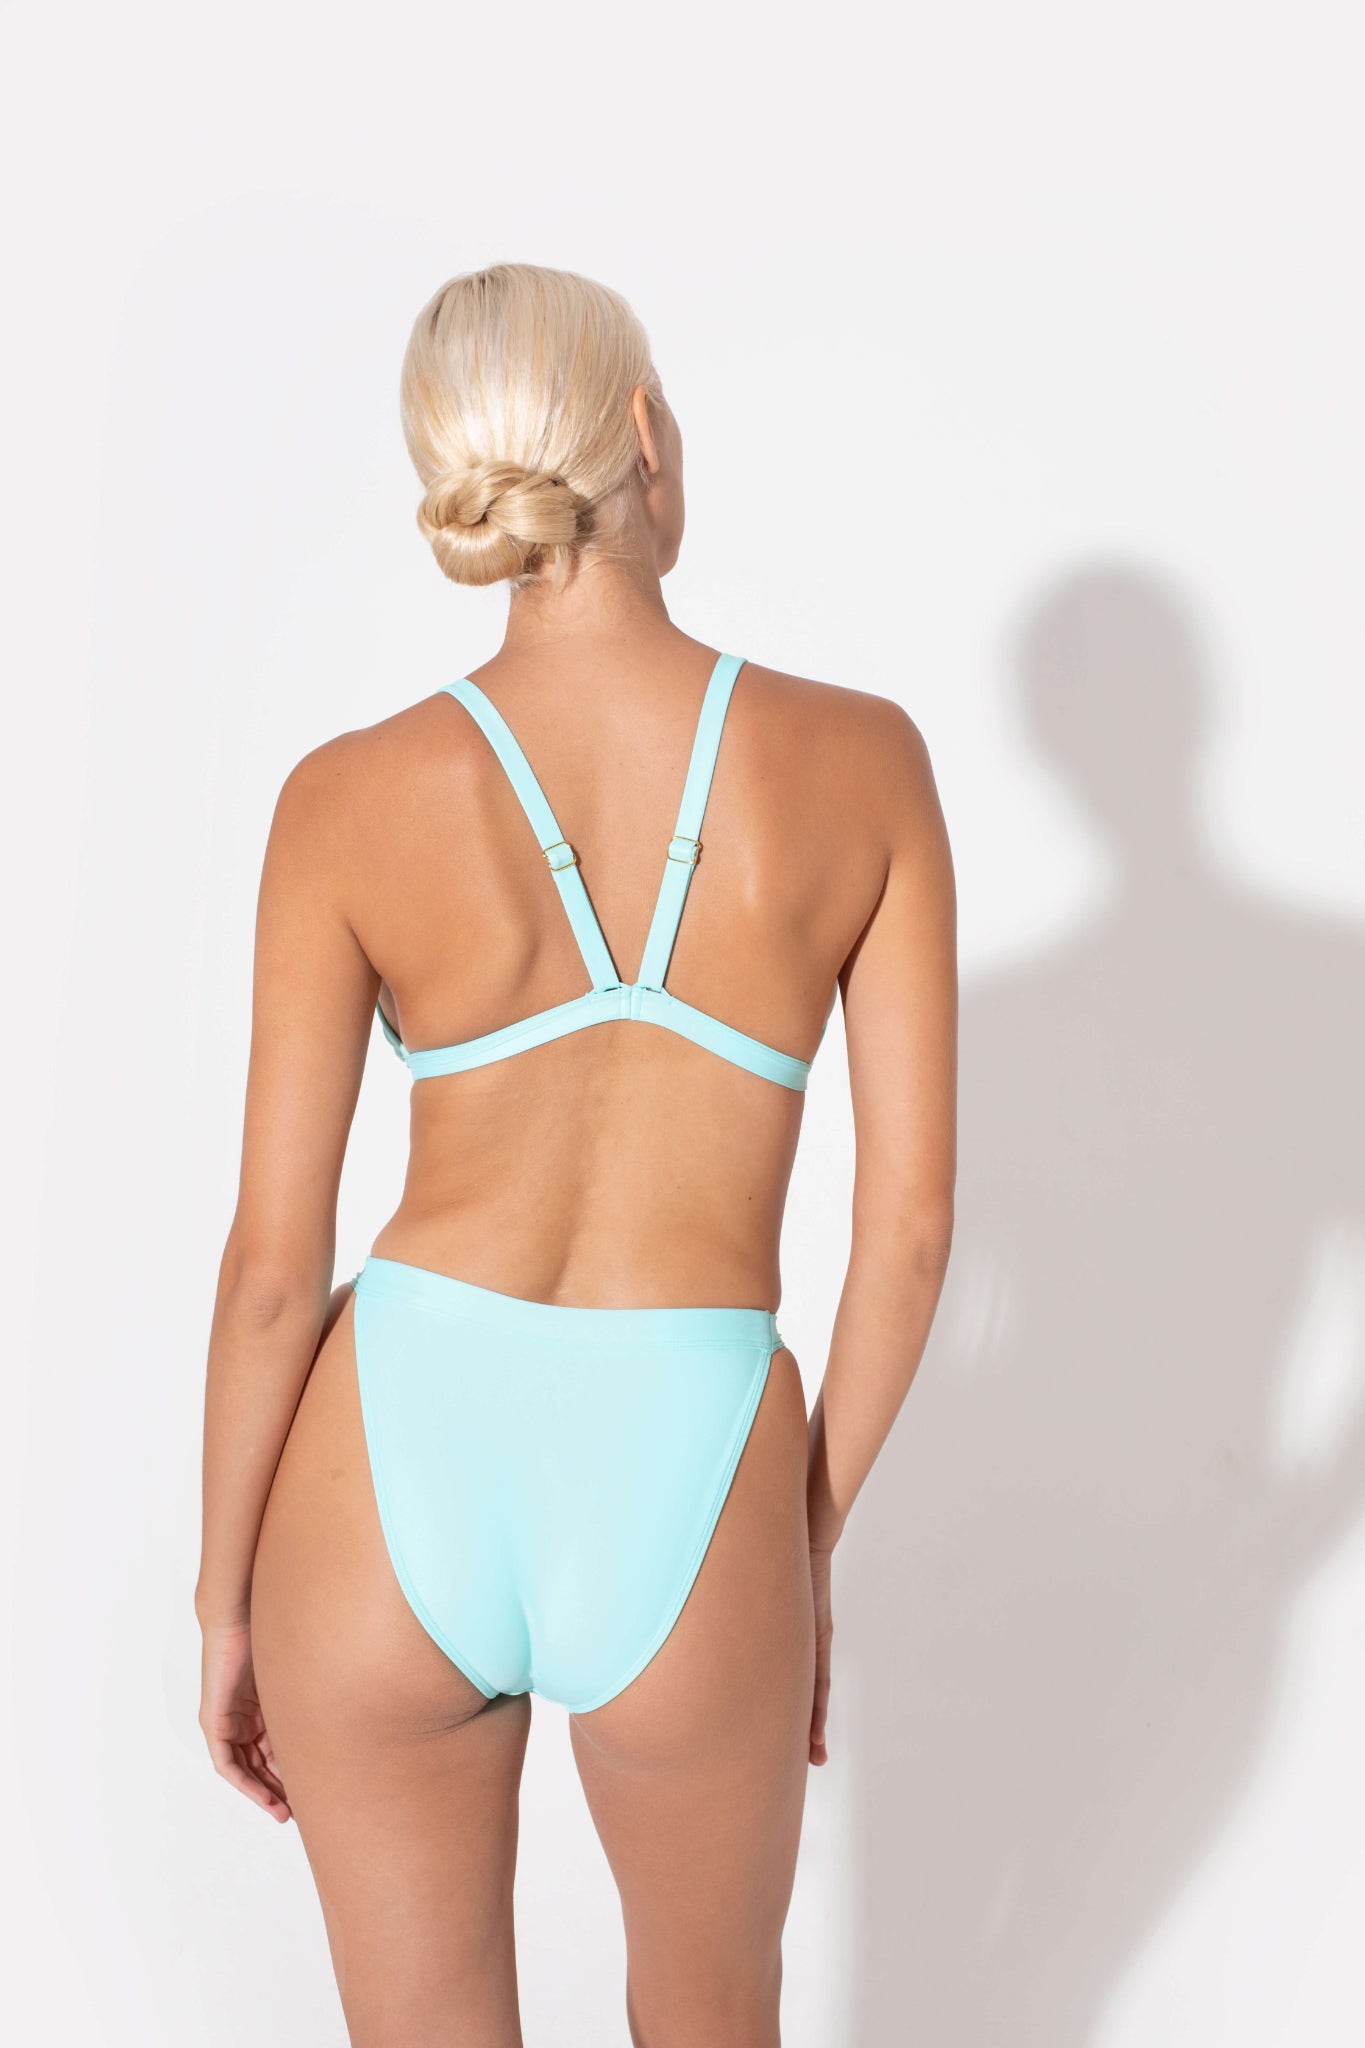 Hedy mid rise bikini bottoms in blue from luxury sustainable swimwear brand Koraru